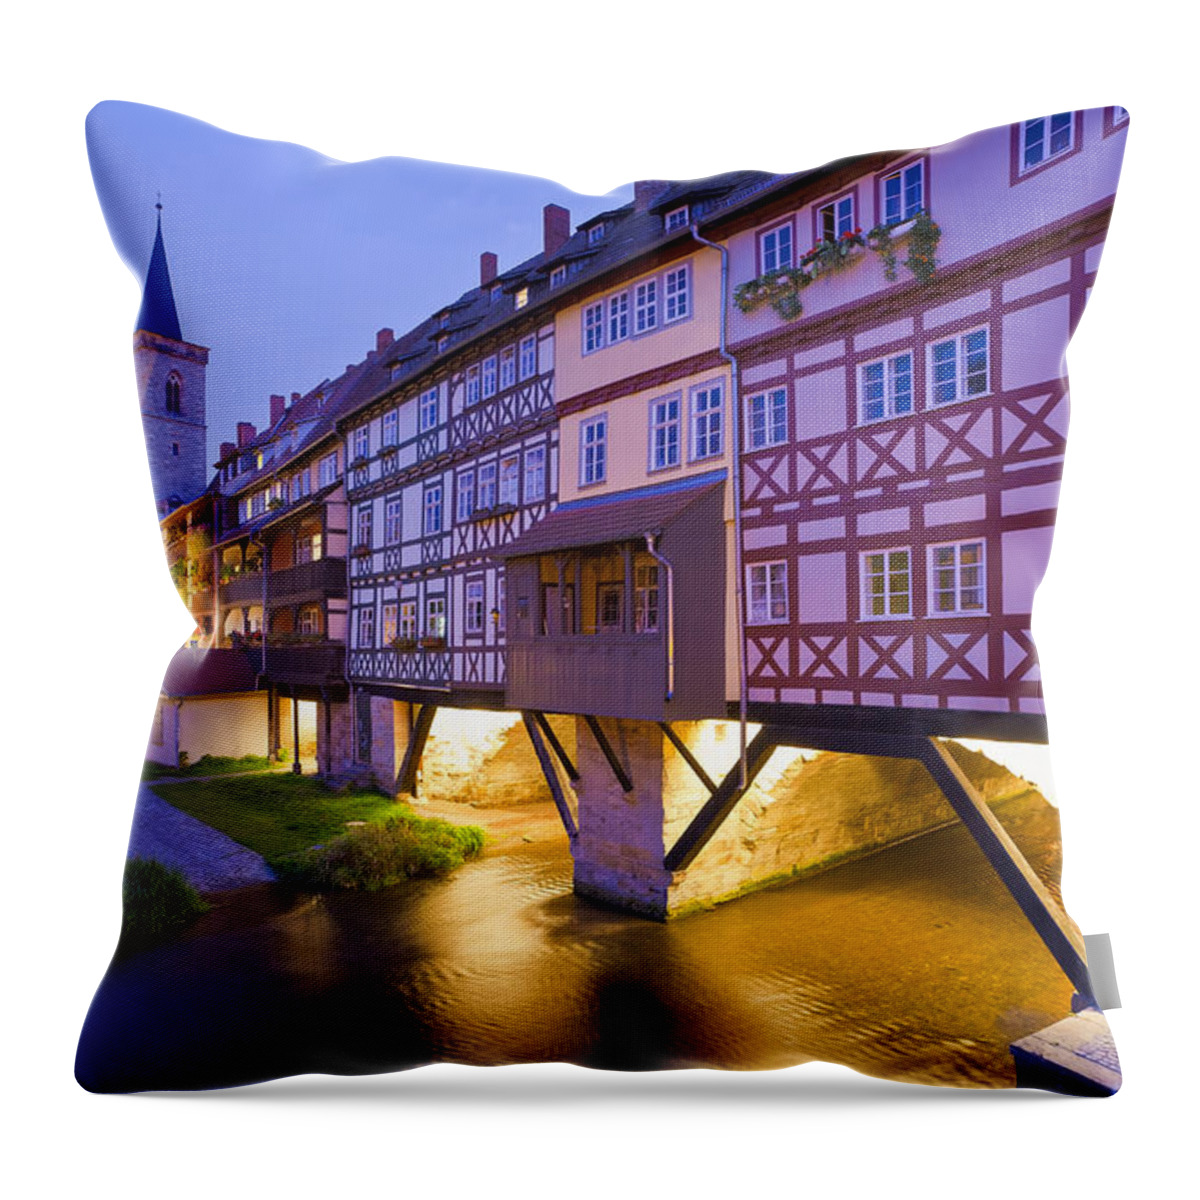 Architecture Throw Pillow featuring the photograph Merchants' bridge in Erfurt by Werner Dieterich